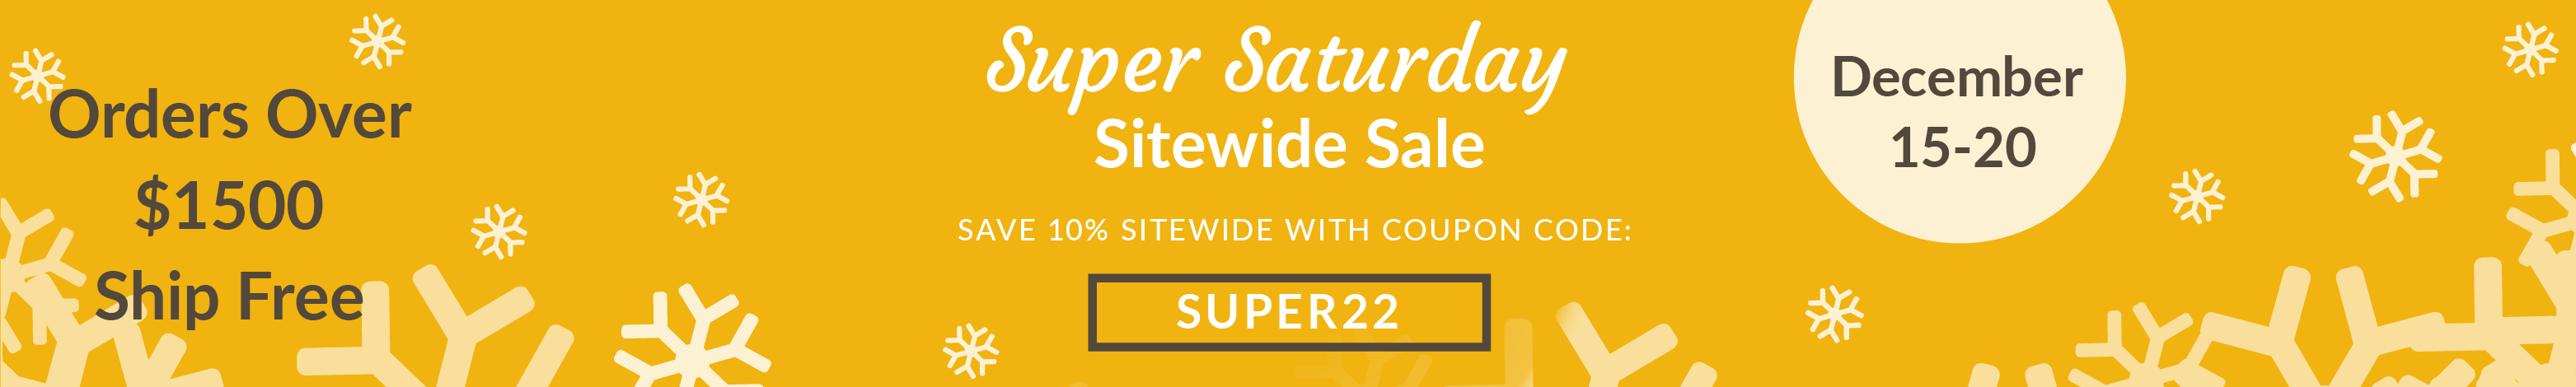 Super Weekend Sitewide Sale